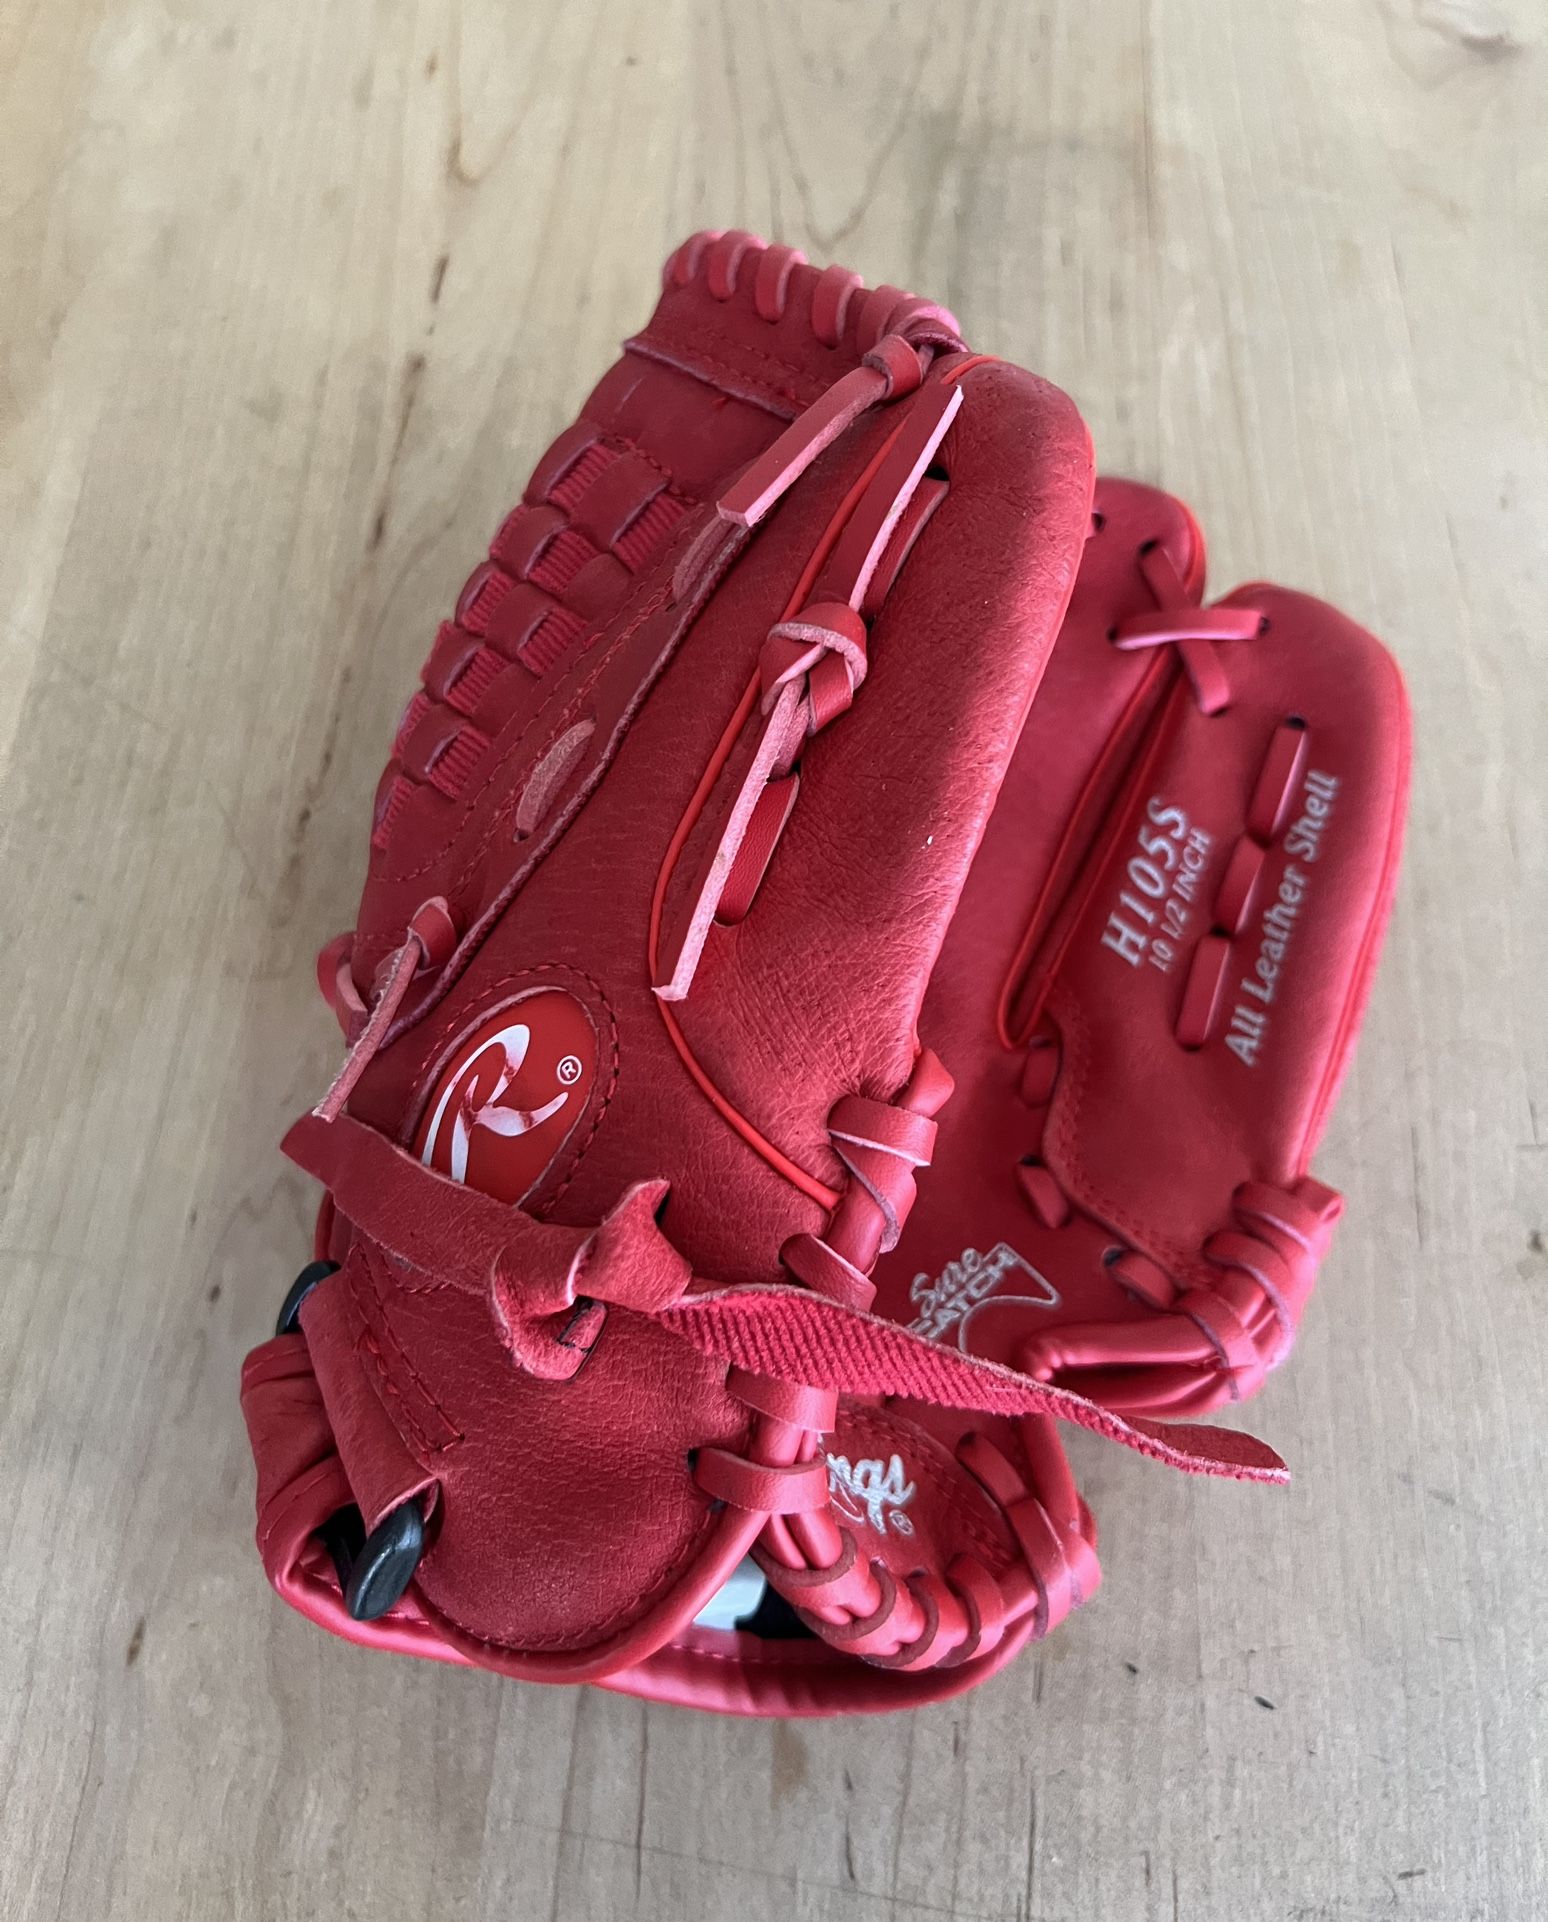 Rawlings 105S 10.5” Youth Leather Baseball Softball Glove Amazing Condition!!i